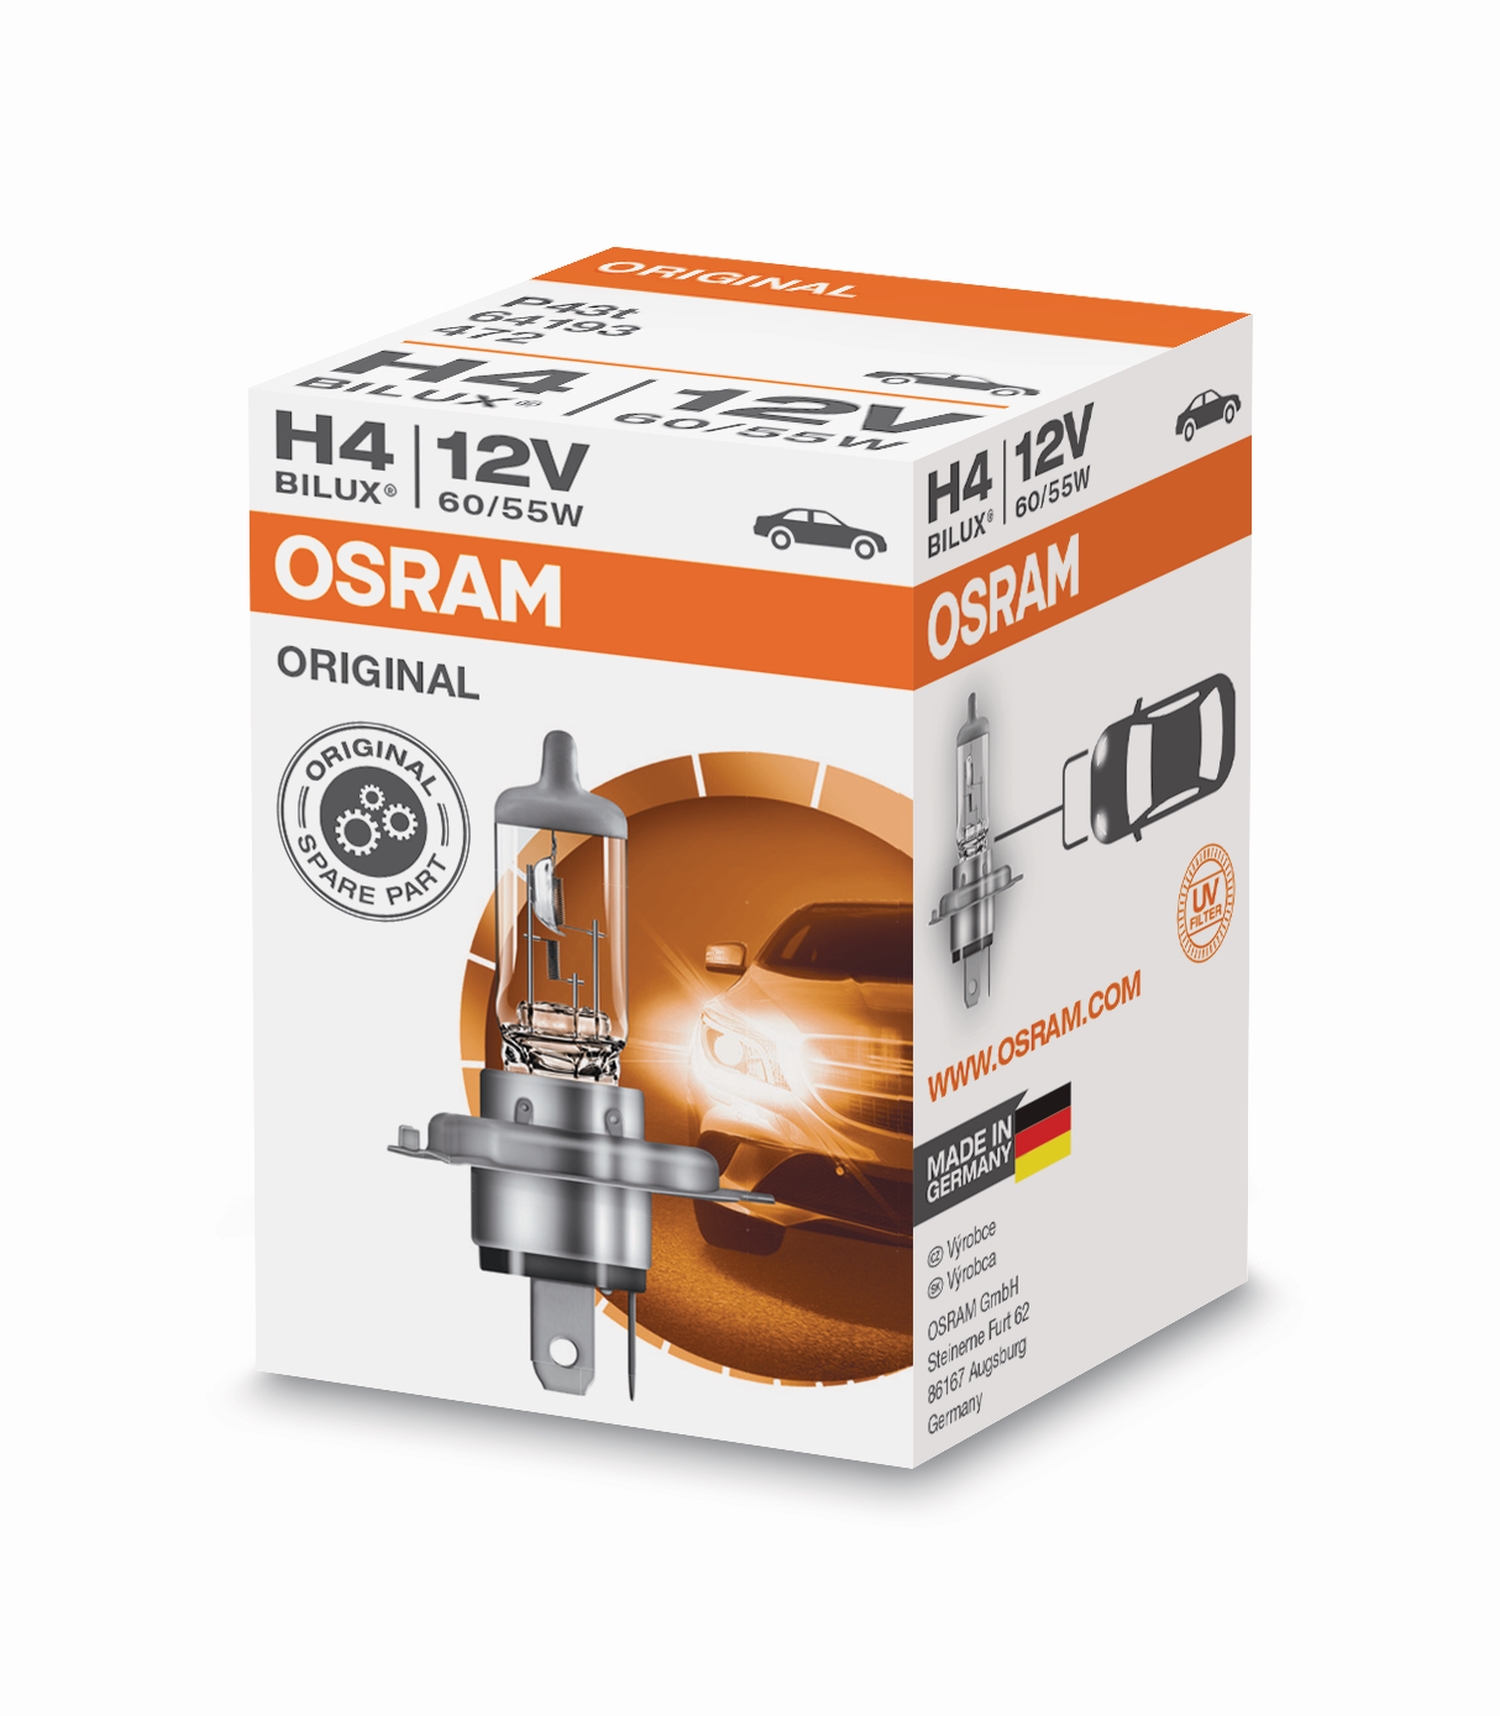 OSRAM Standard H4 Werkstatt 12V-60/55w p43t